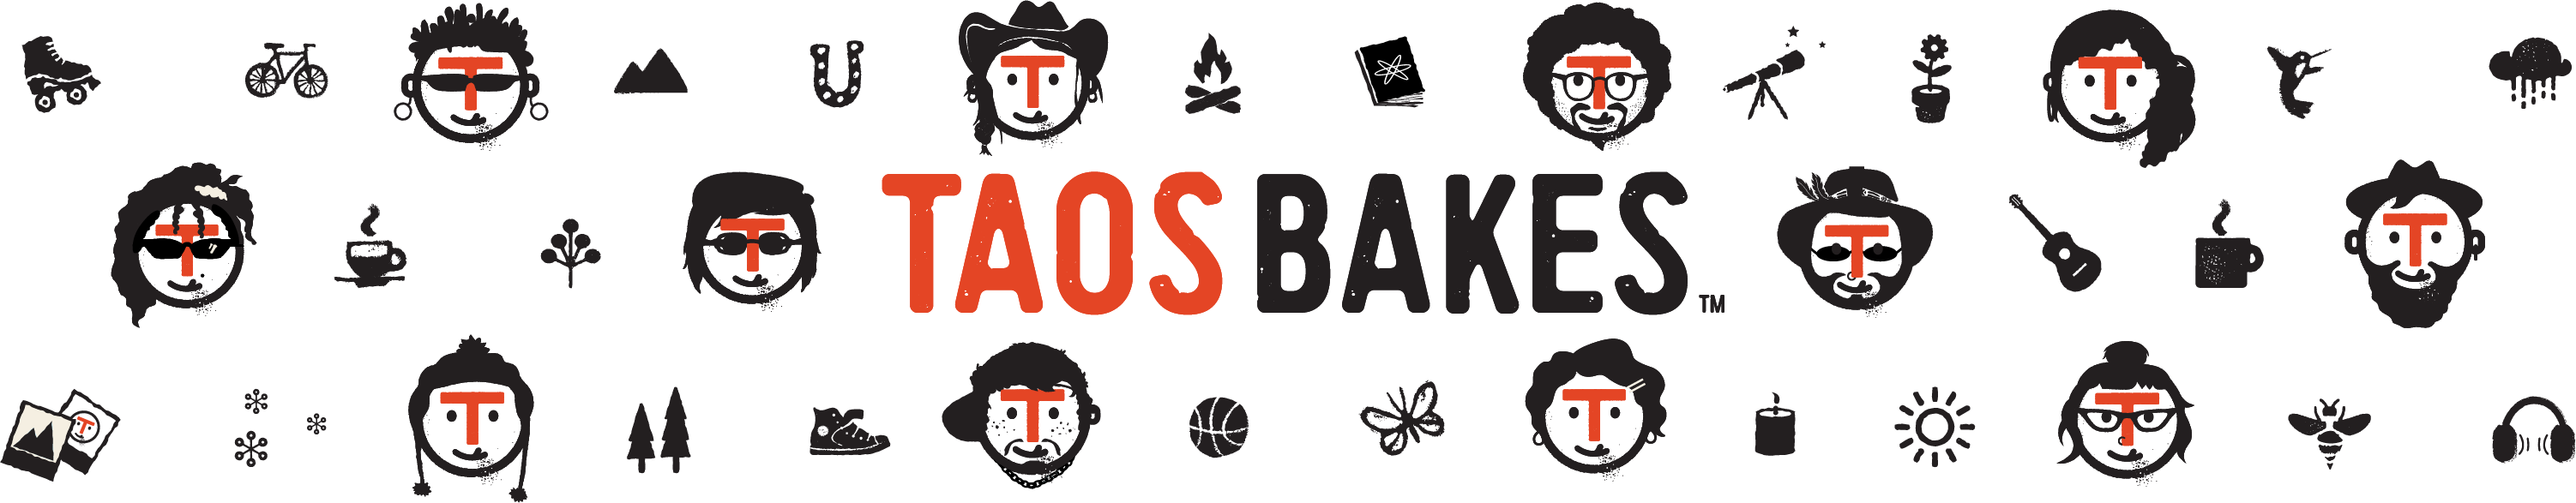 Taos Bakes Branding